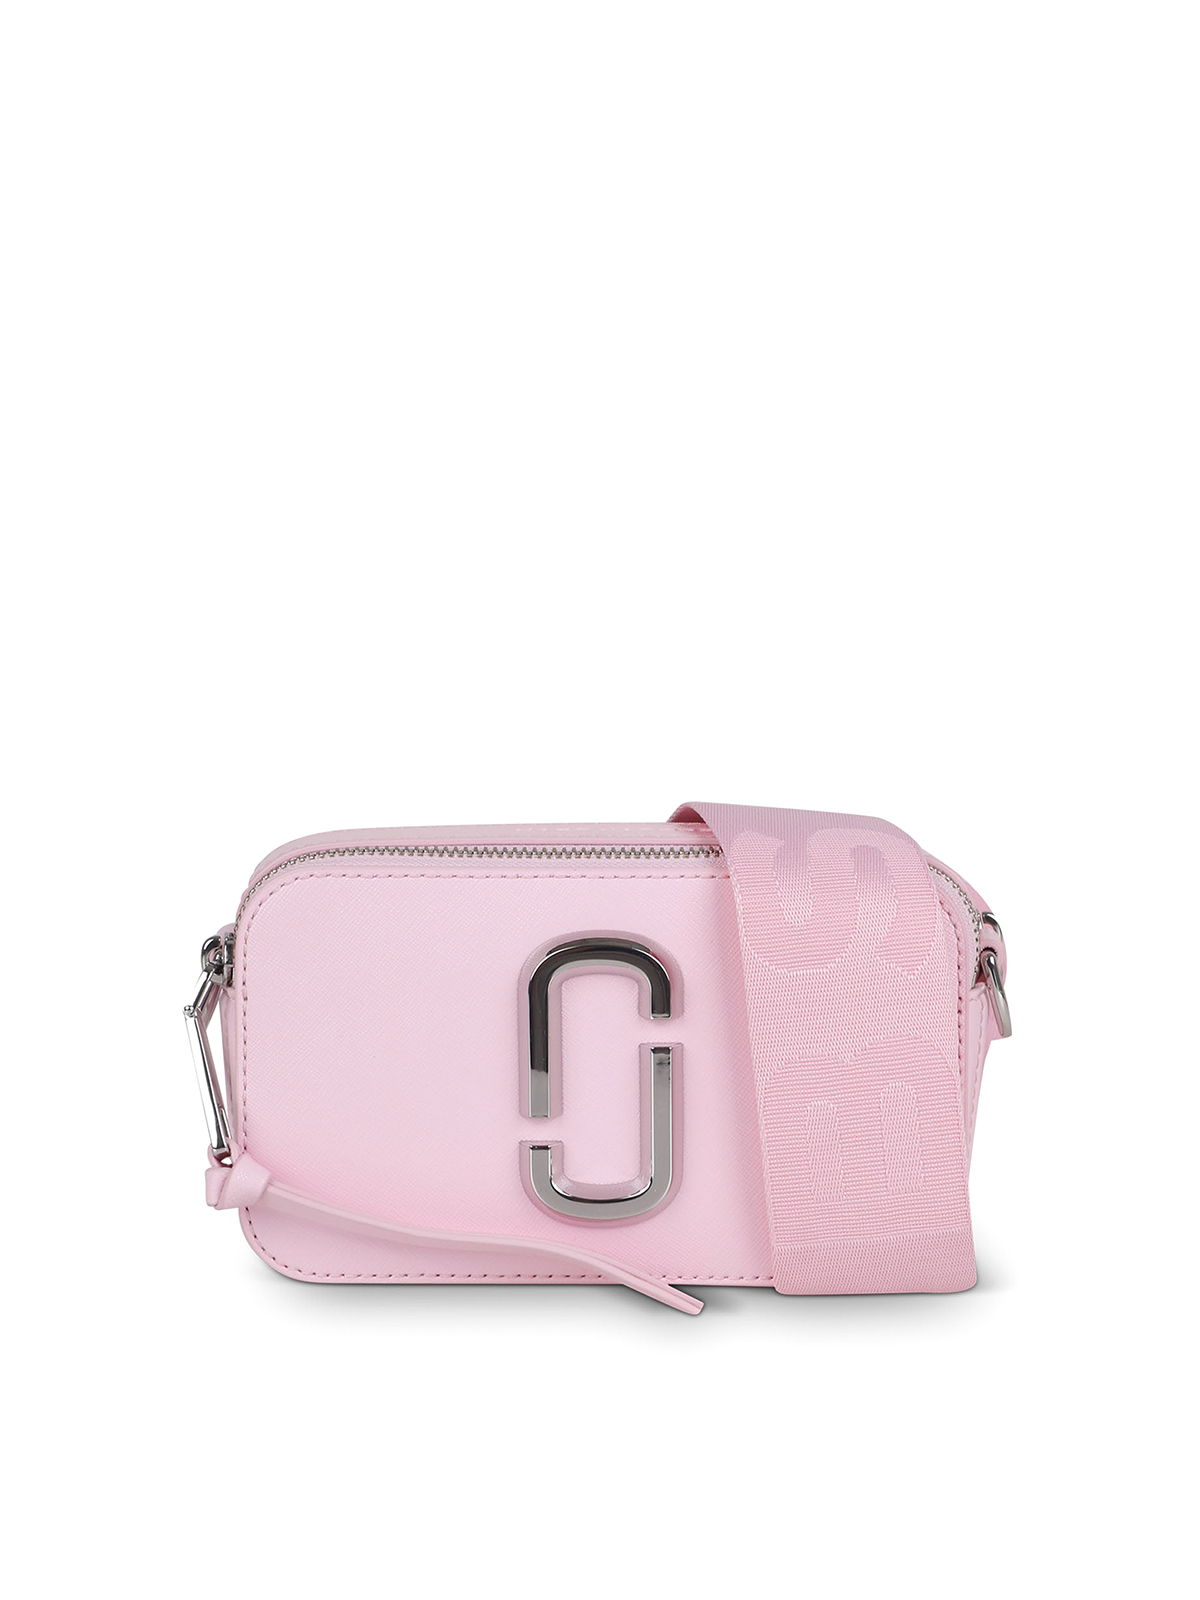 Marc Jacobs The Snapshot Shoulder Bag In Pink